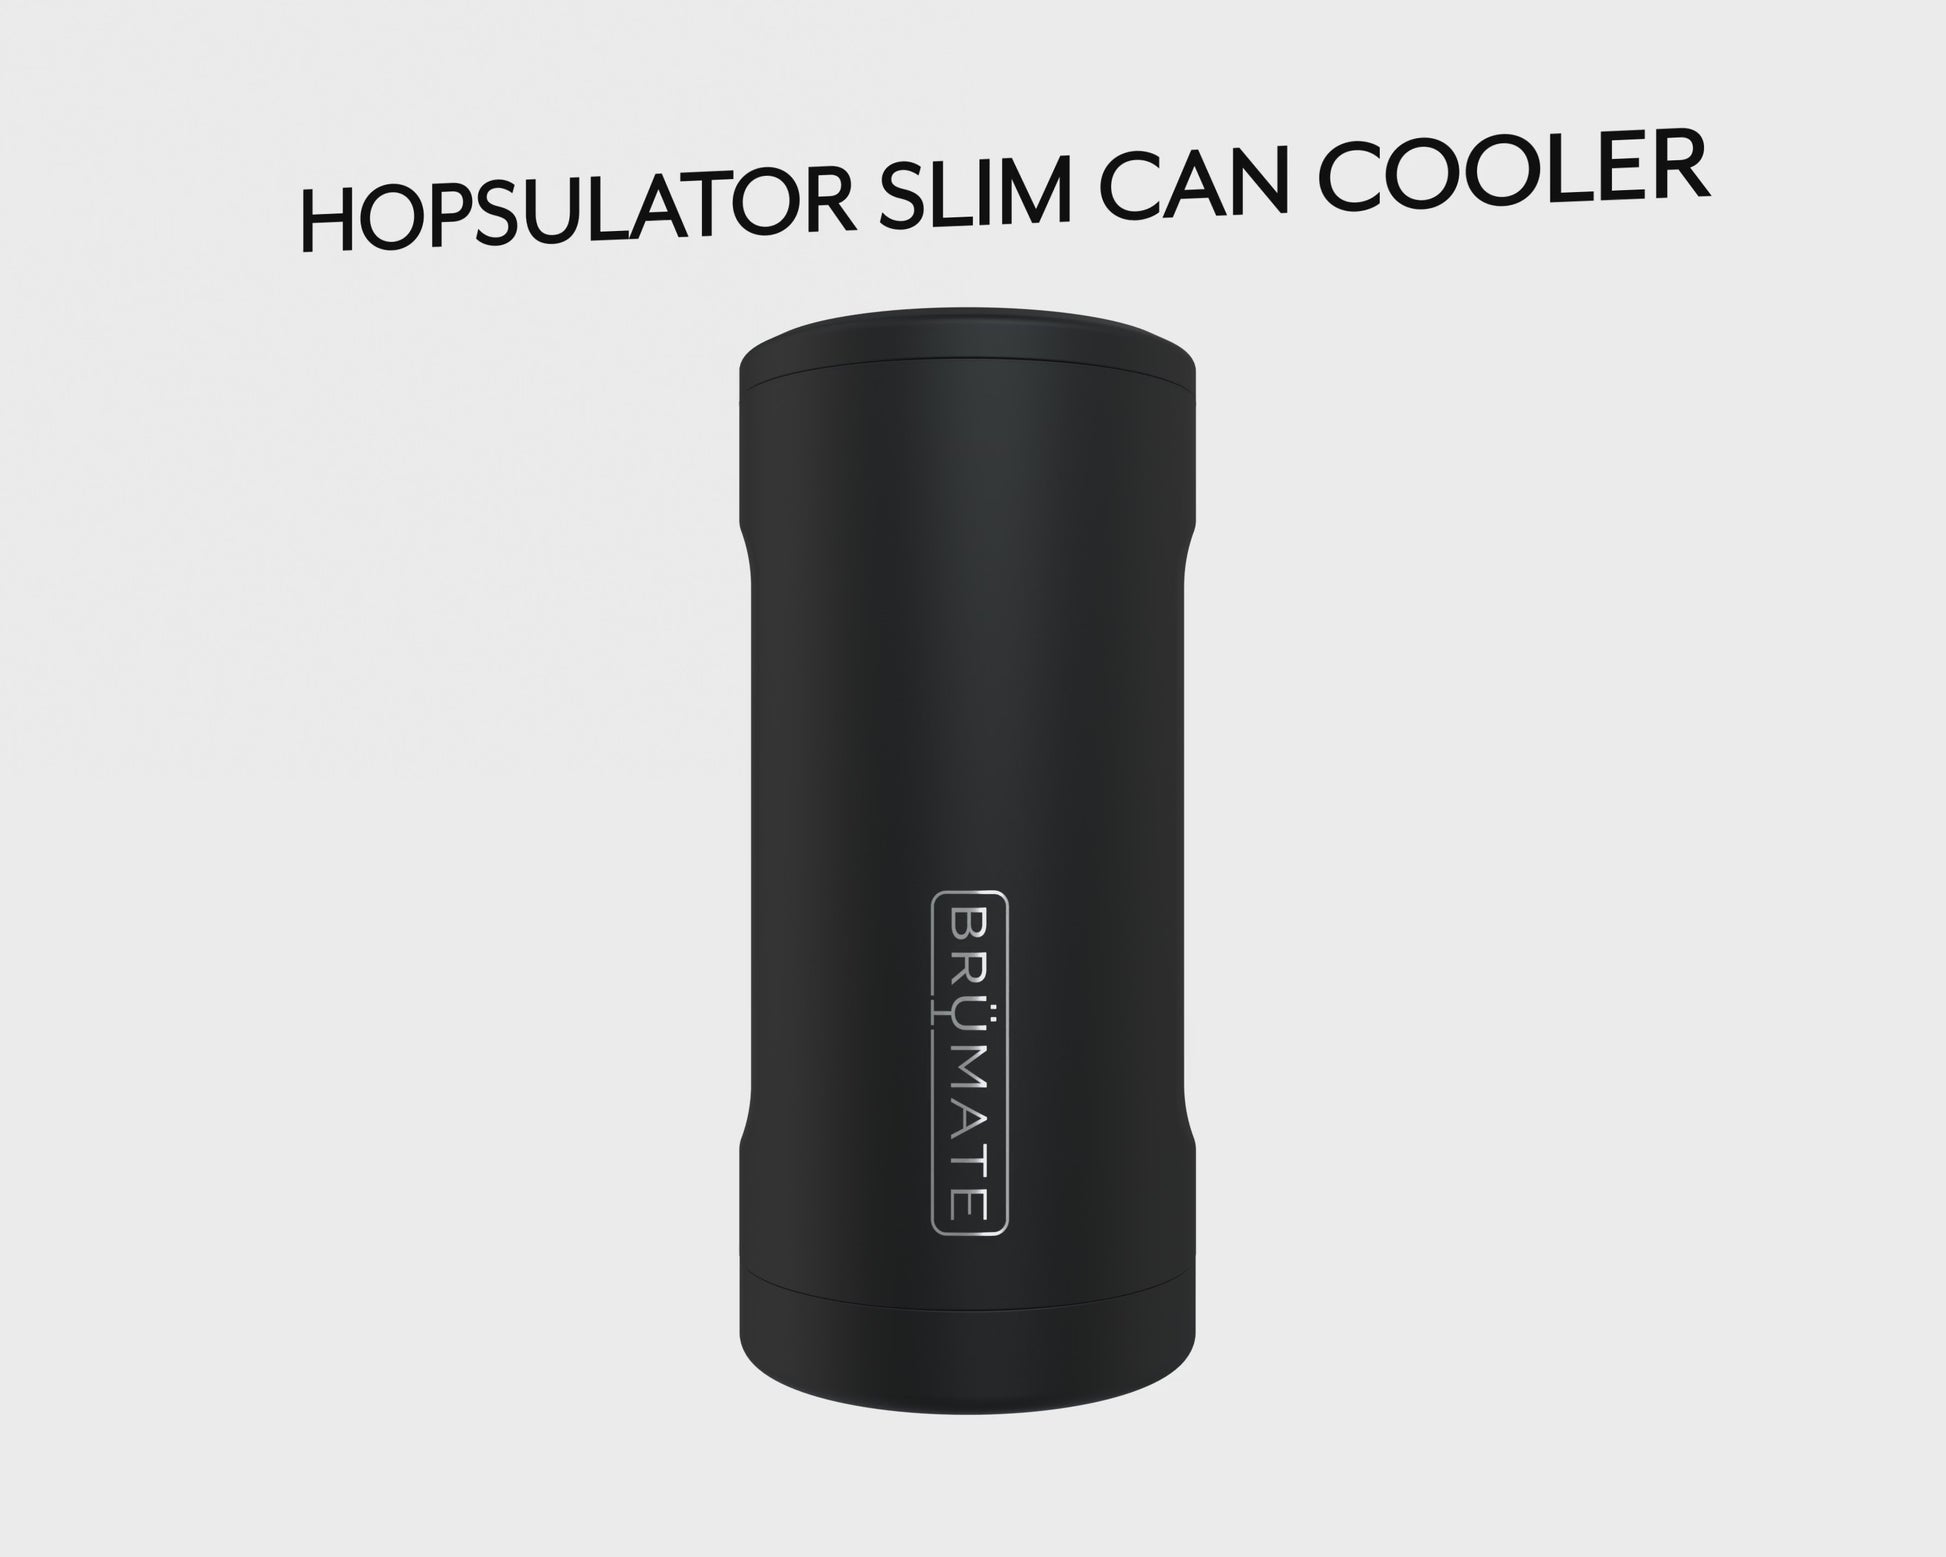 Personalized BruMate Hopsulator Slim - Solid Colors - Customized